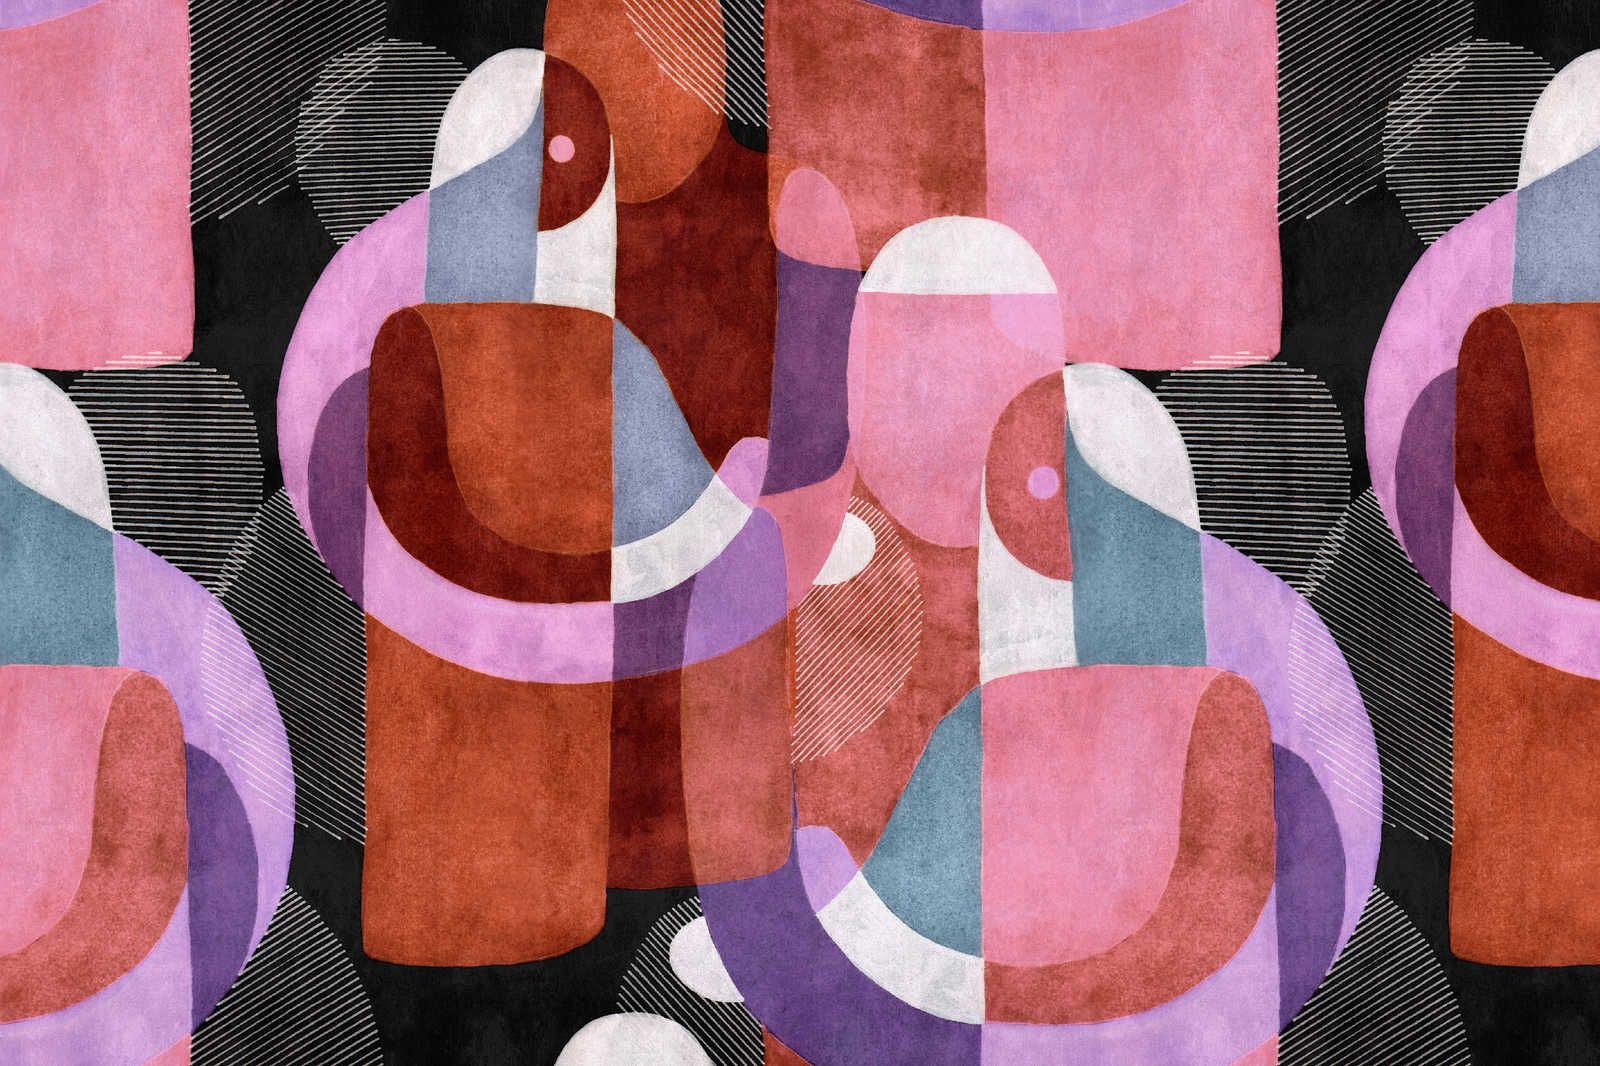             Meeting Place 2 - Canvas schilderij abstract etno design in zwart & roze - 0,90 m x 0,60 m
        